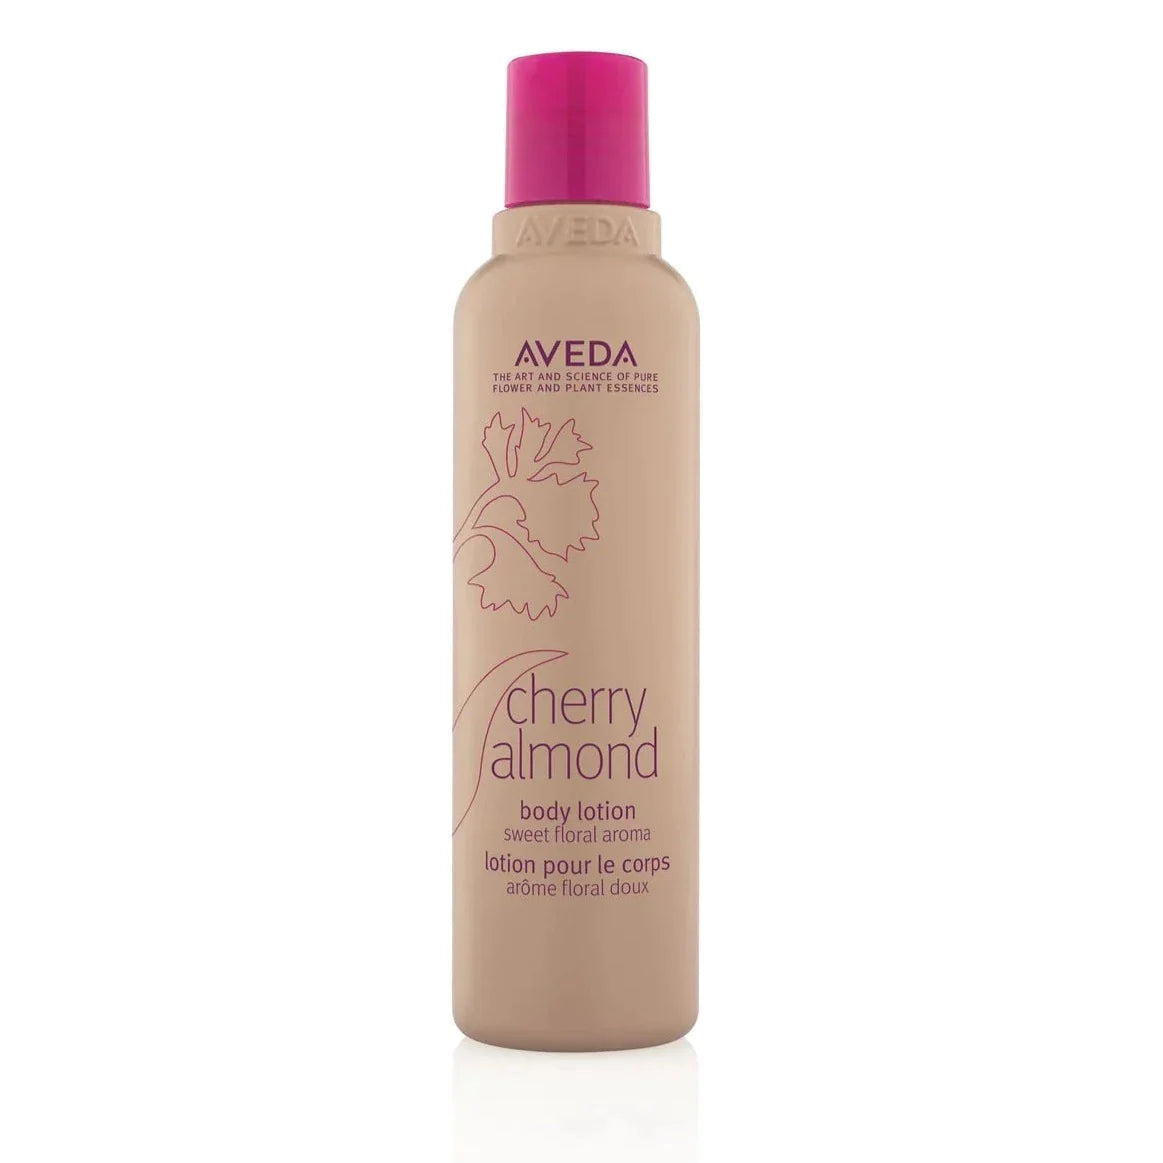 Aveda Cherry Almond Body Lotion - 200ml - Glow Addict Luxe